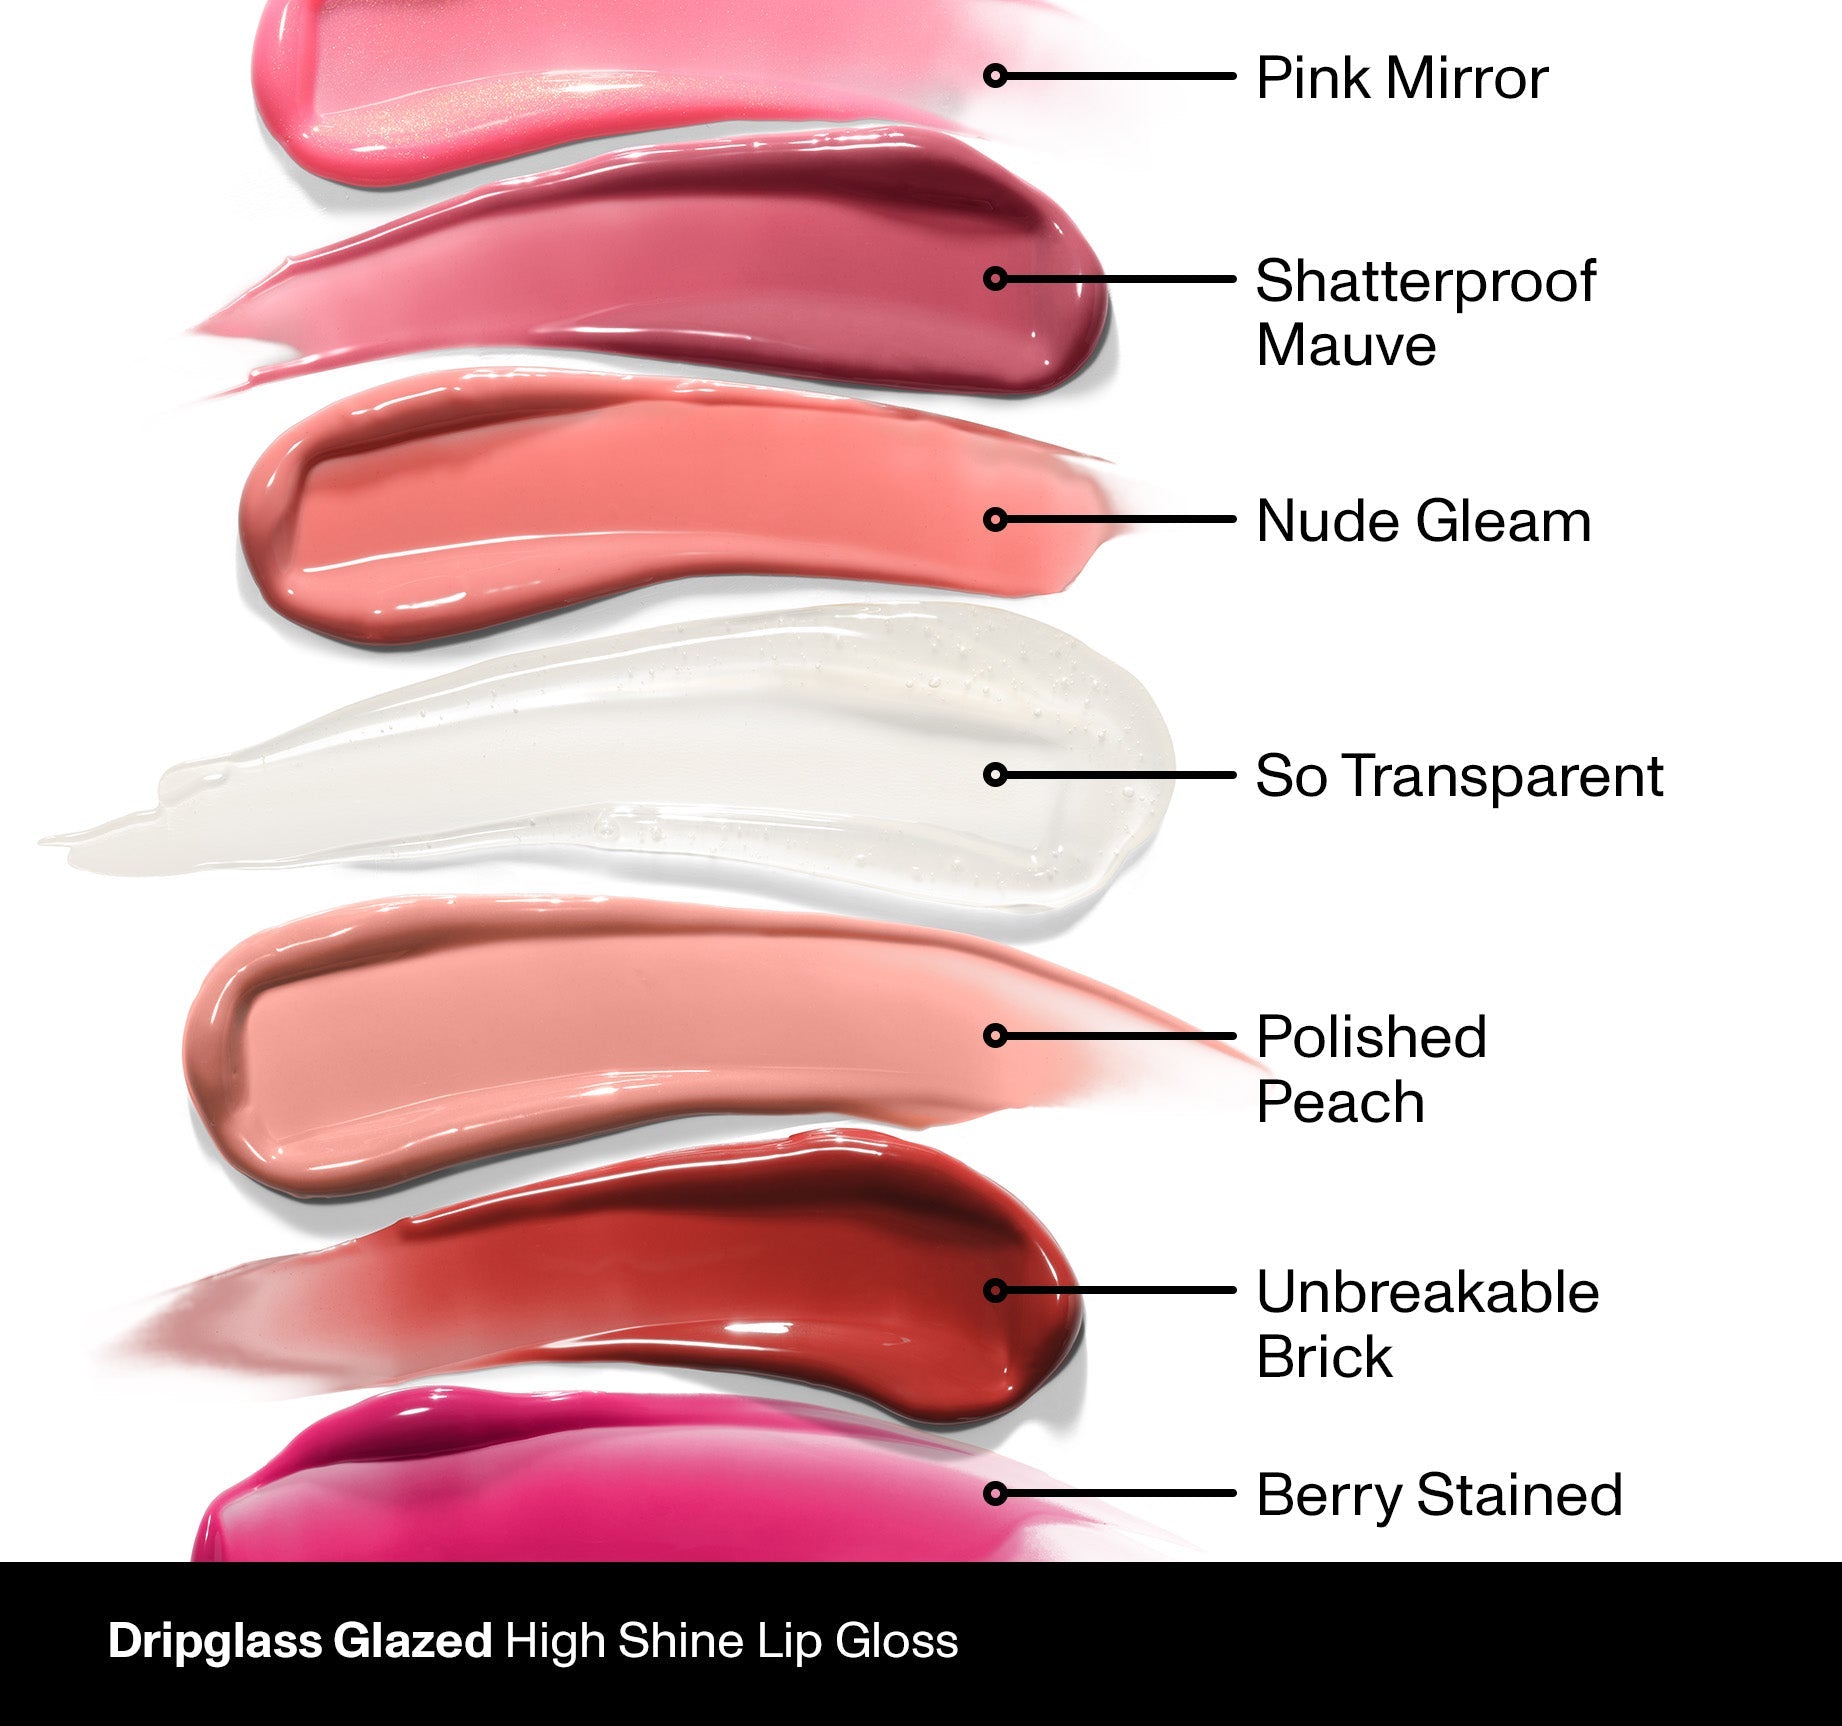 Dripglass Glazed High Shine Lip Gloss - Nude Gleam - Image 6